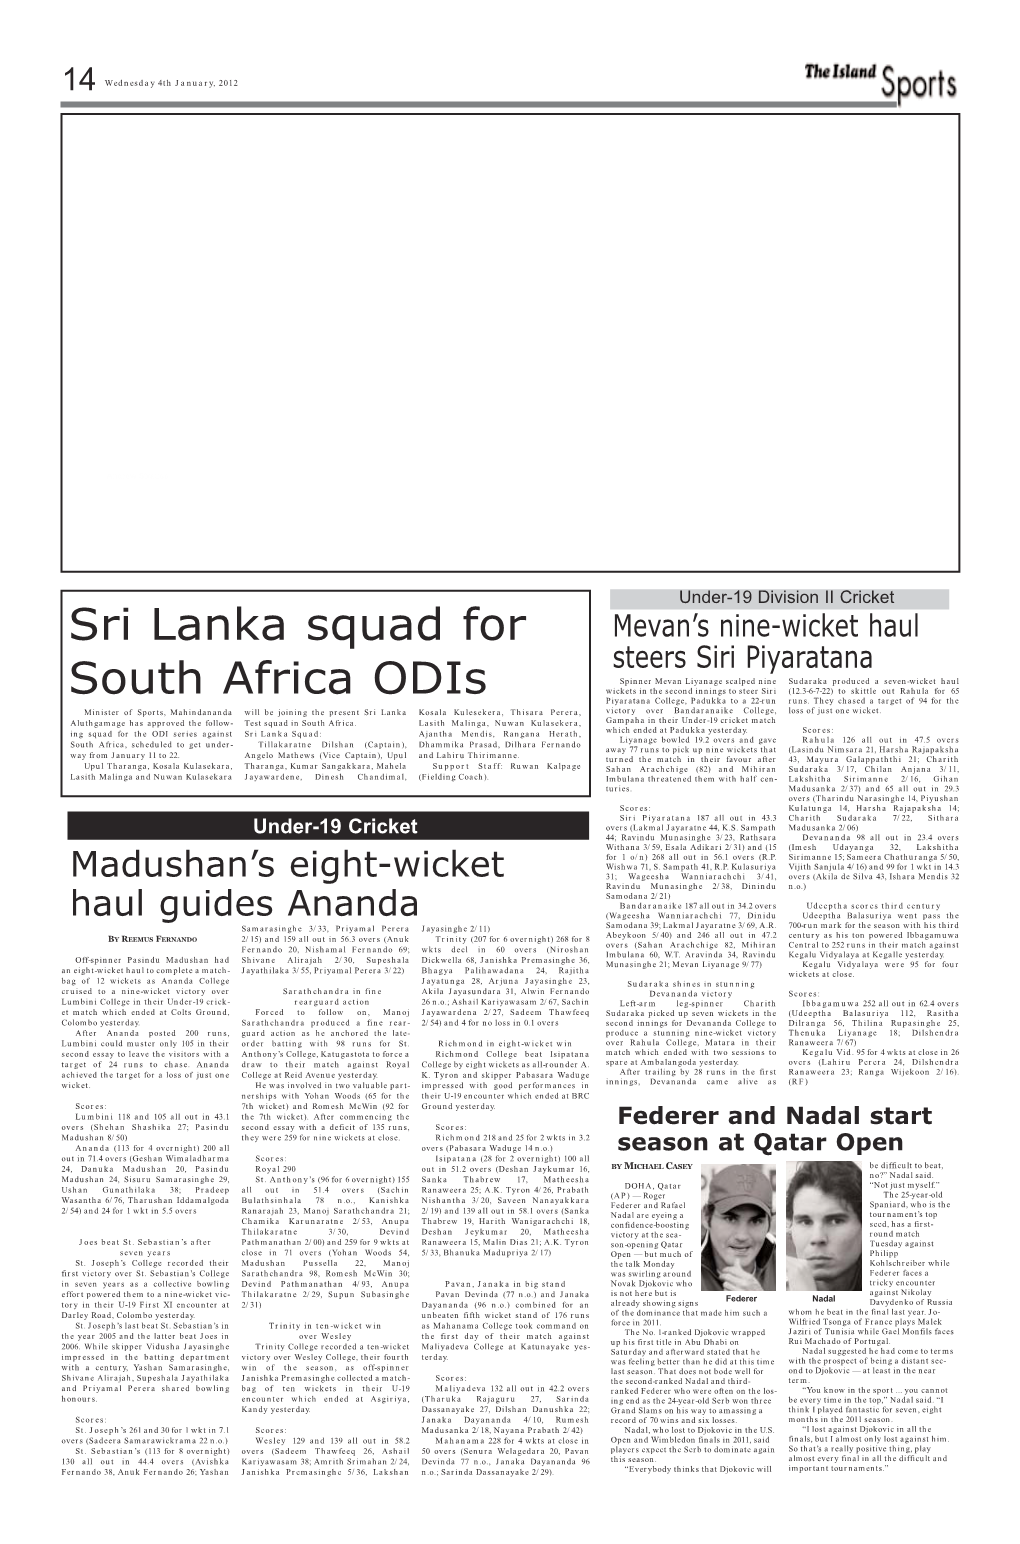 Sri Lanka Squad for South Africa Odis